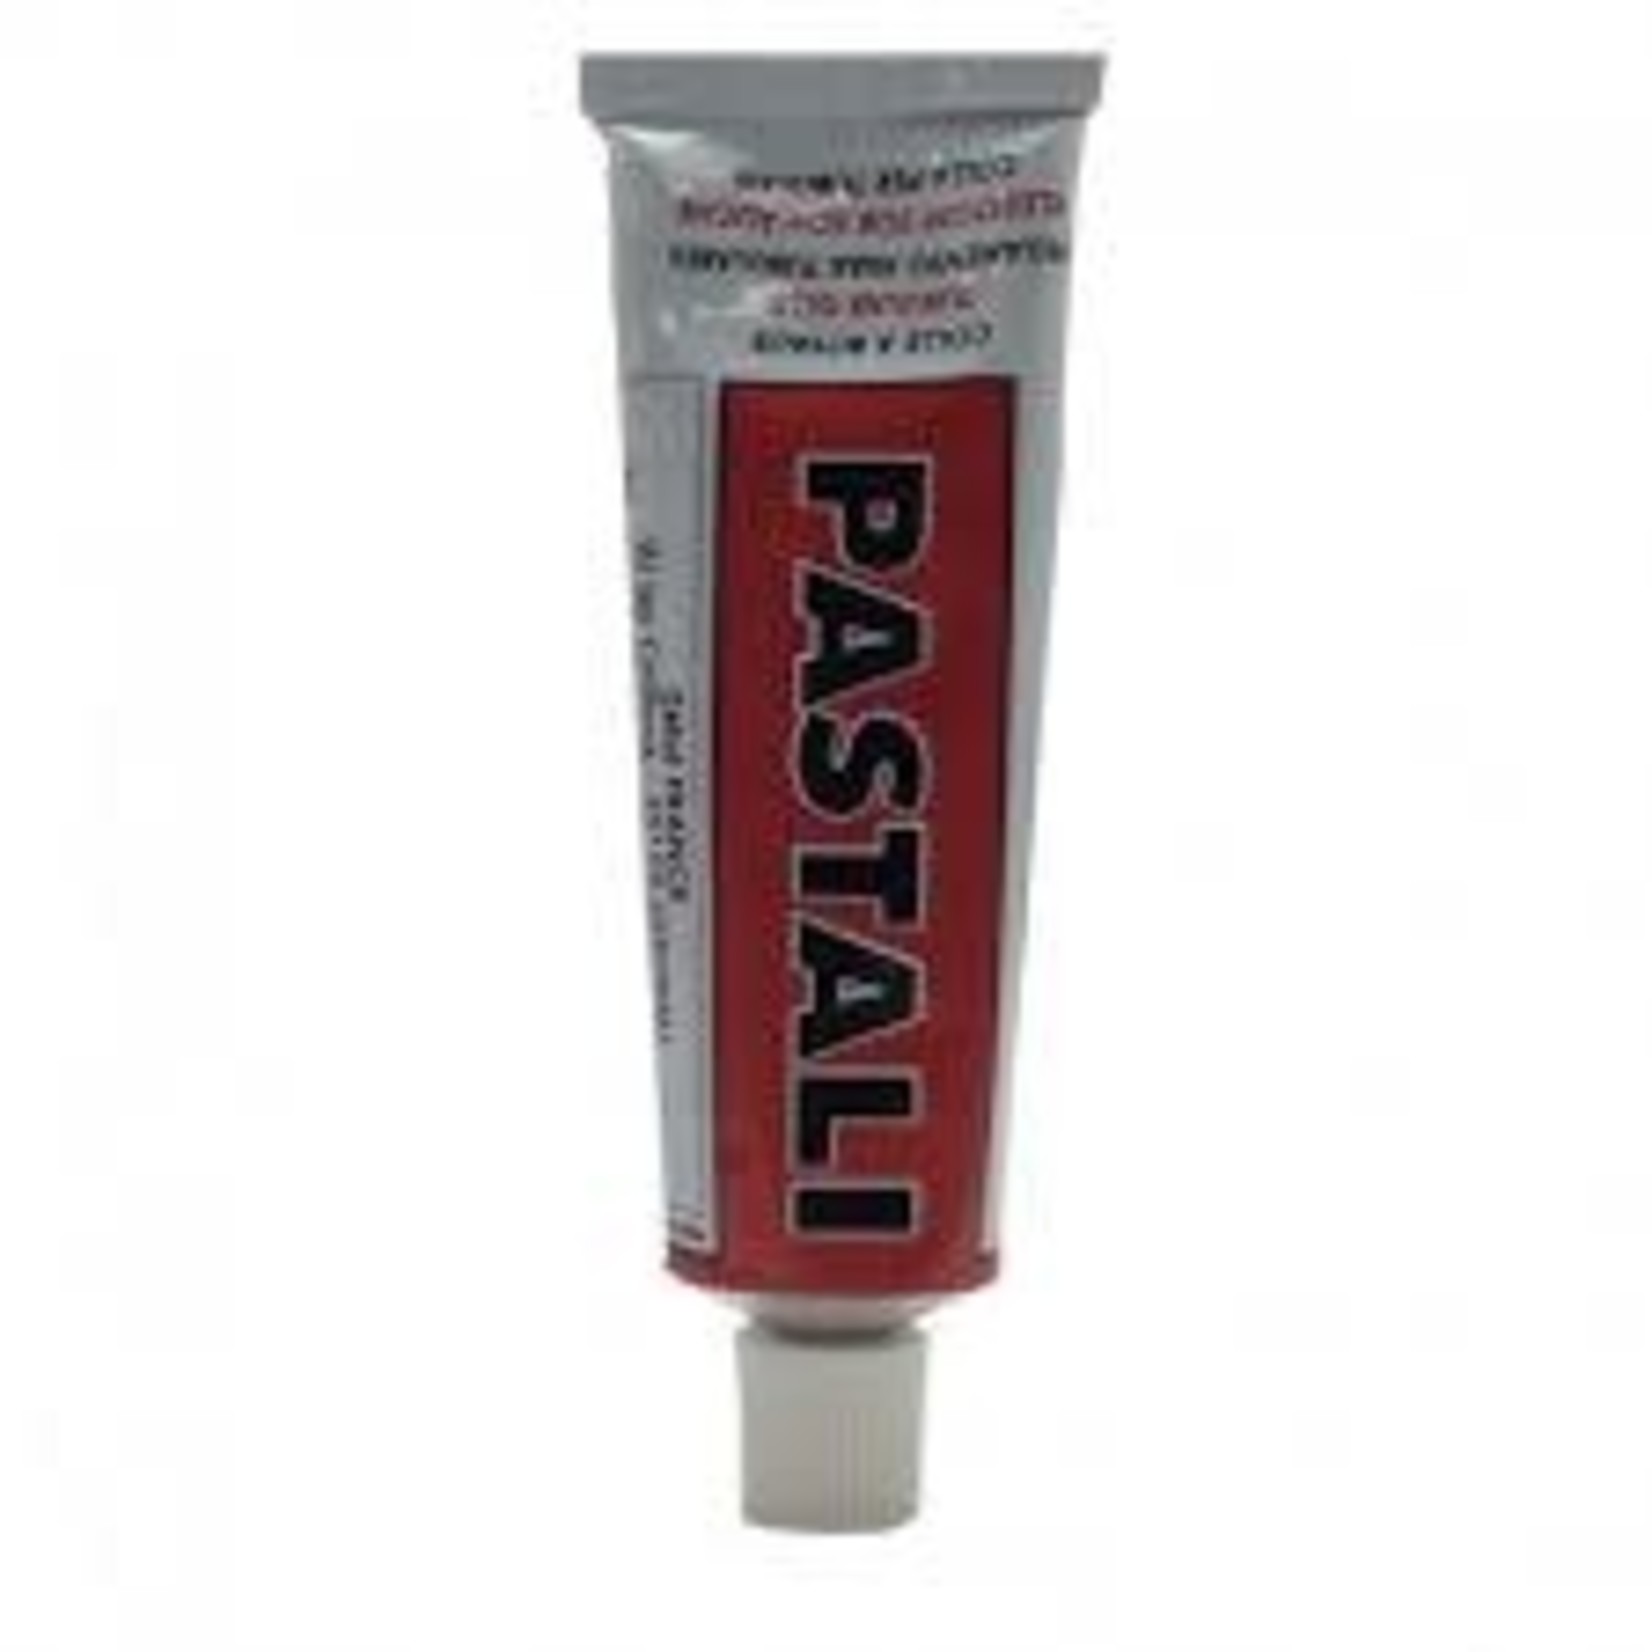 Zefal, Pastali tubular glue, 27g, on blister card